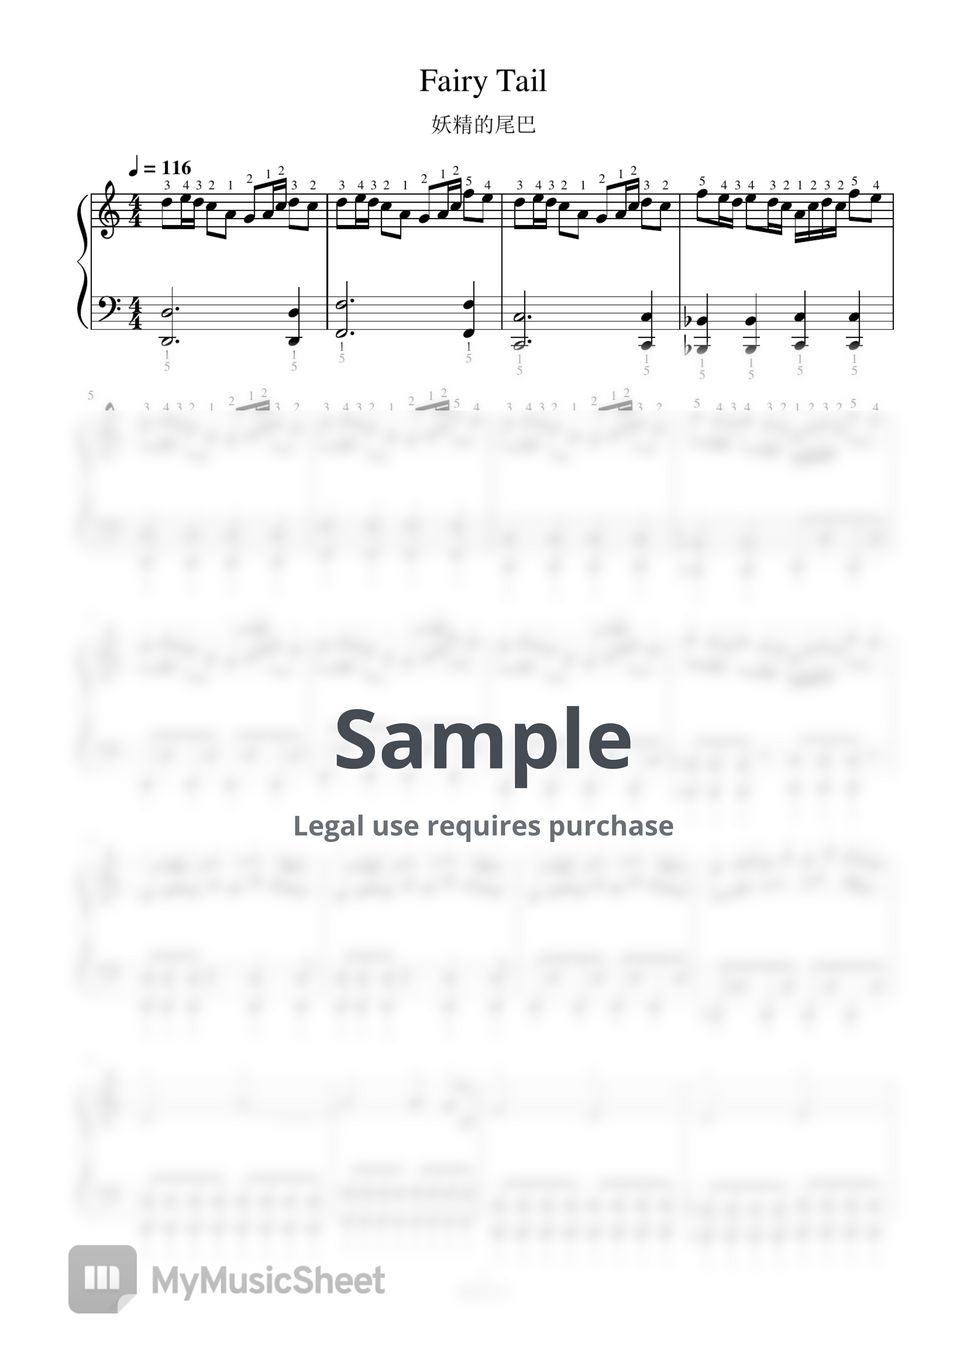 Fairy Tail - 妖精的尾巴-全指法钢琴谱高清正版完整版 (Full Fingering Piano Score) by 紫韵音乐